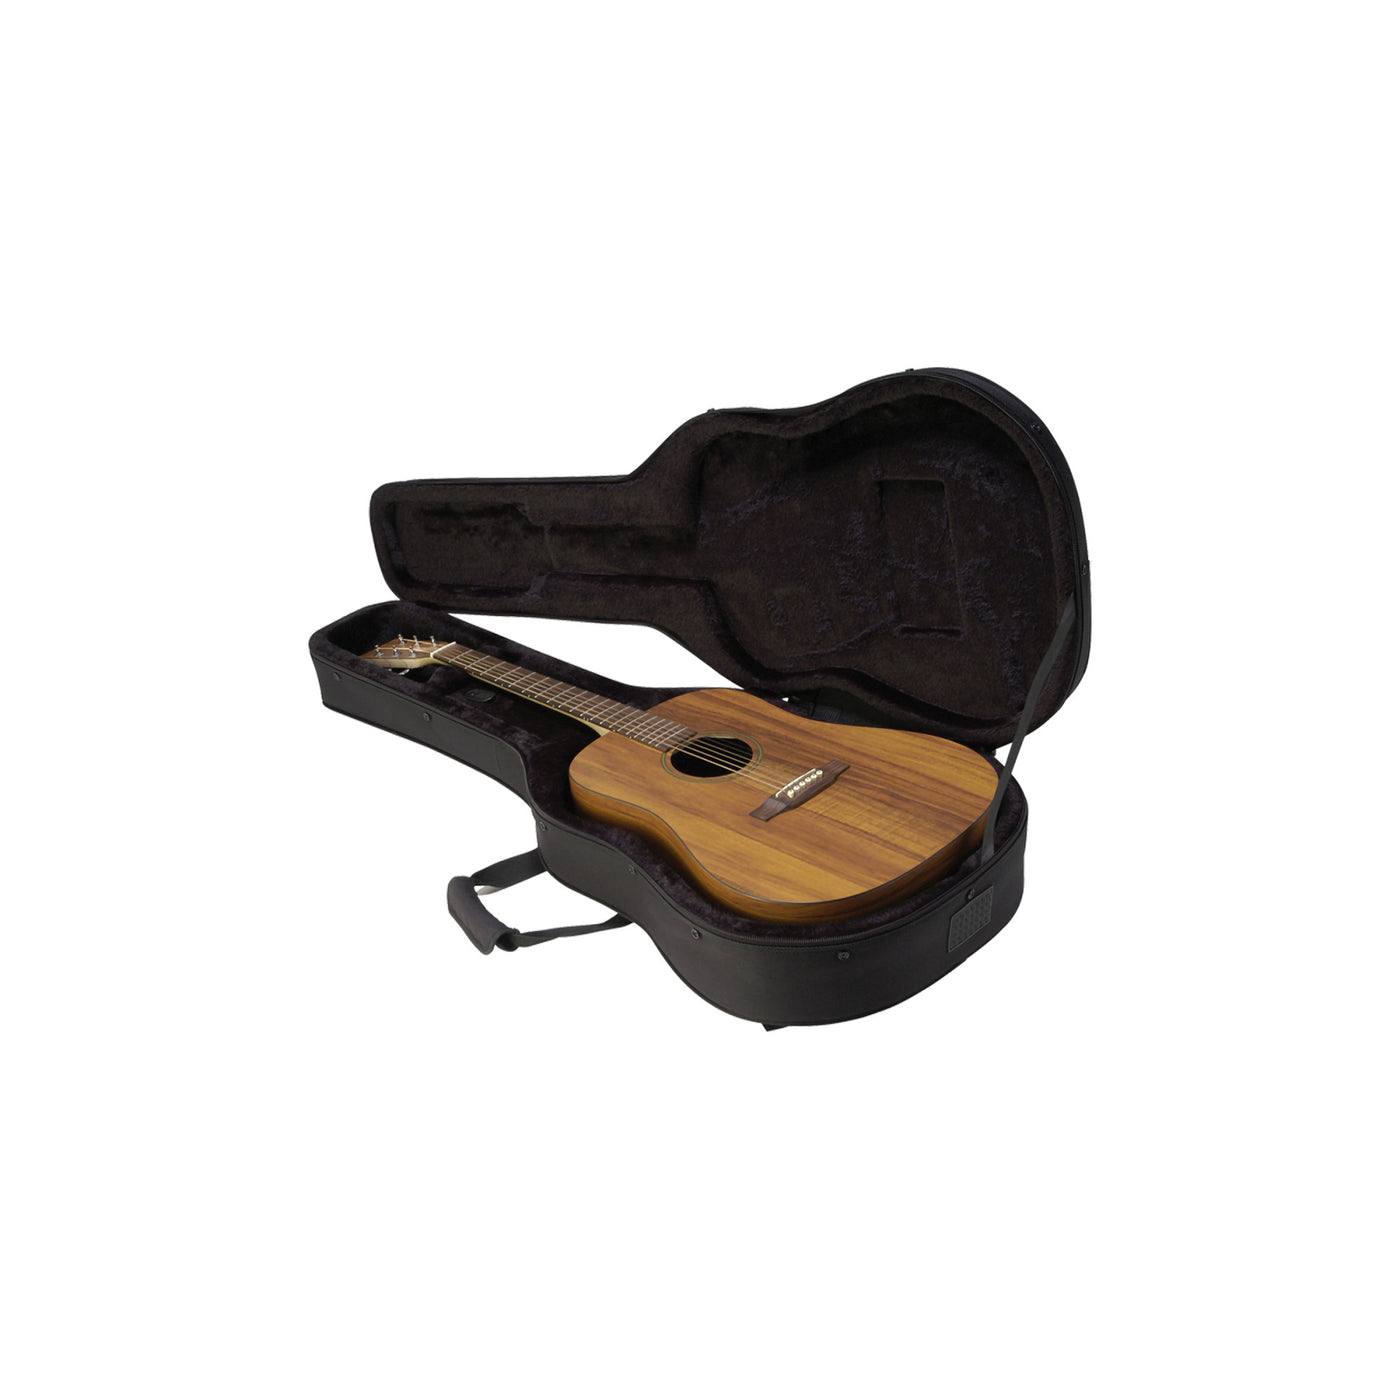 SKB Acoustic Dreadnought Guitar Soft Case Semi-Rigid Acoustic Guitar Soft Case with Molded Interior, 600-Denier Nylon Exterior, and Storage Pouches - Dreadnought (1SKB-SC18)